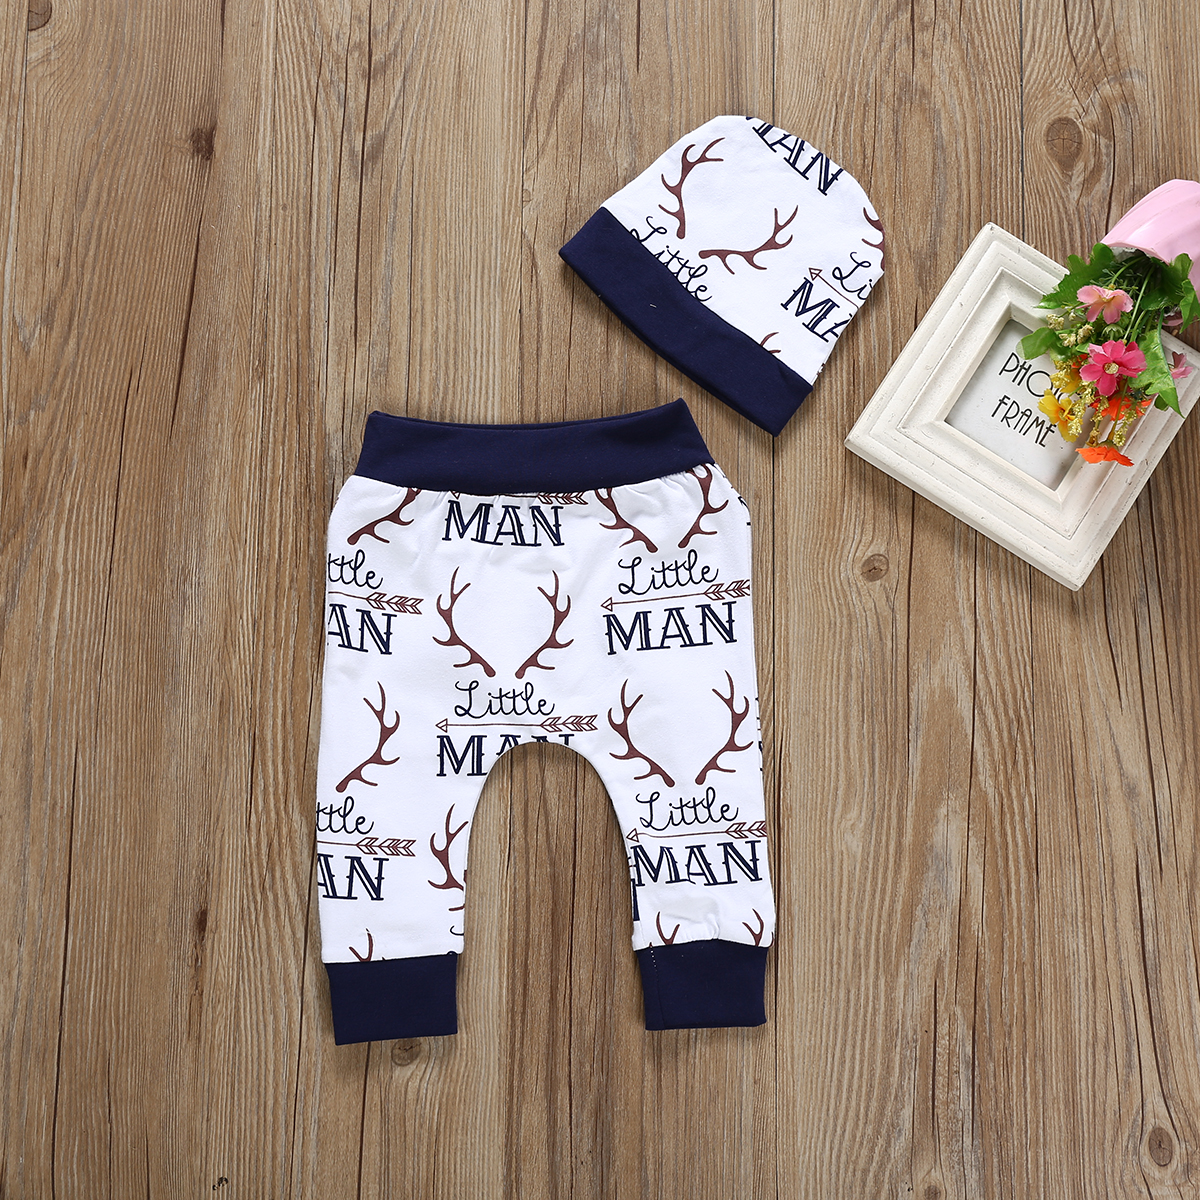 Mommy's Other Man Newborn Baby Boy Short Sleeve Cotton Bodysuit Tops Deer Pant Trouser Hat 3PCS Outfits Boy Clothing Set